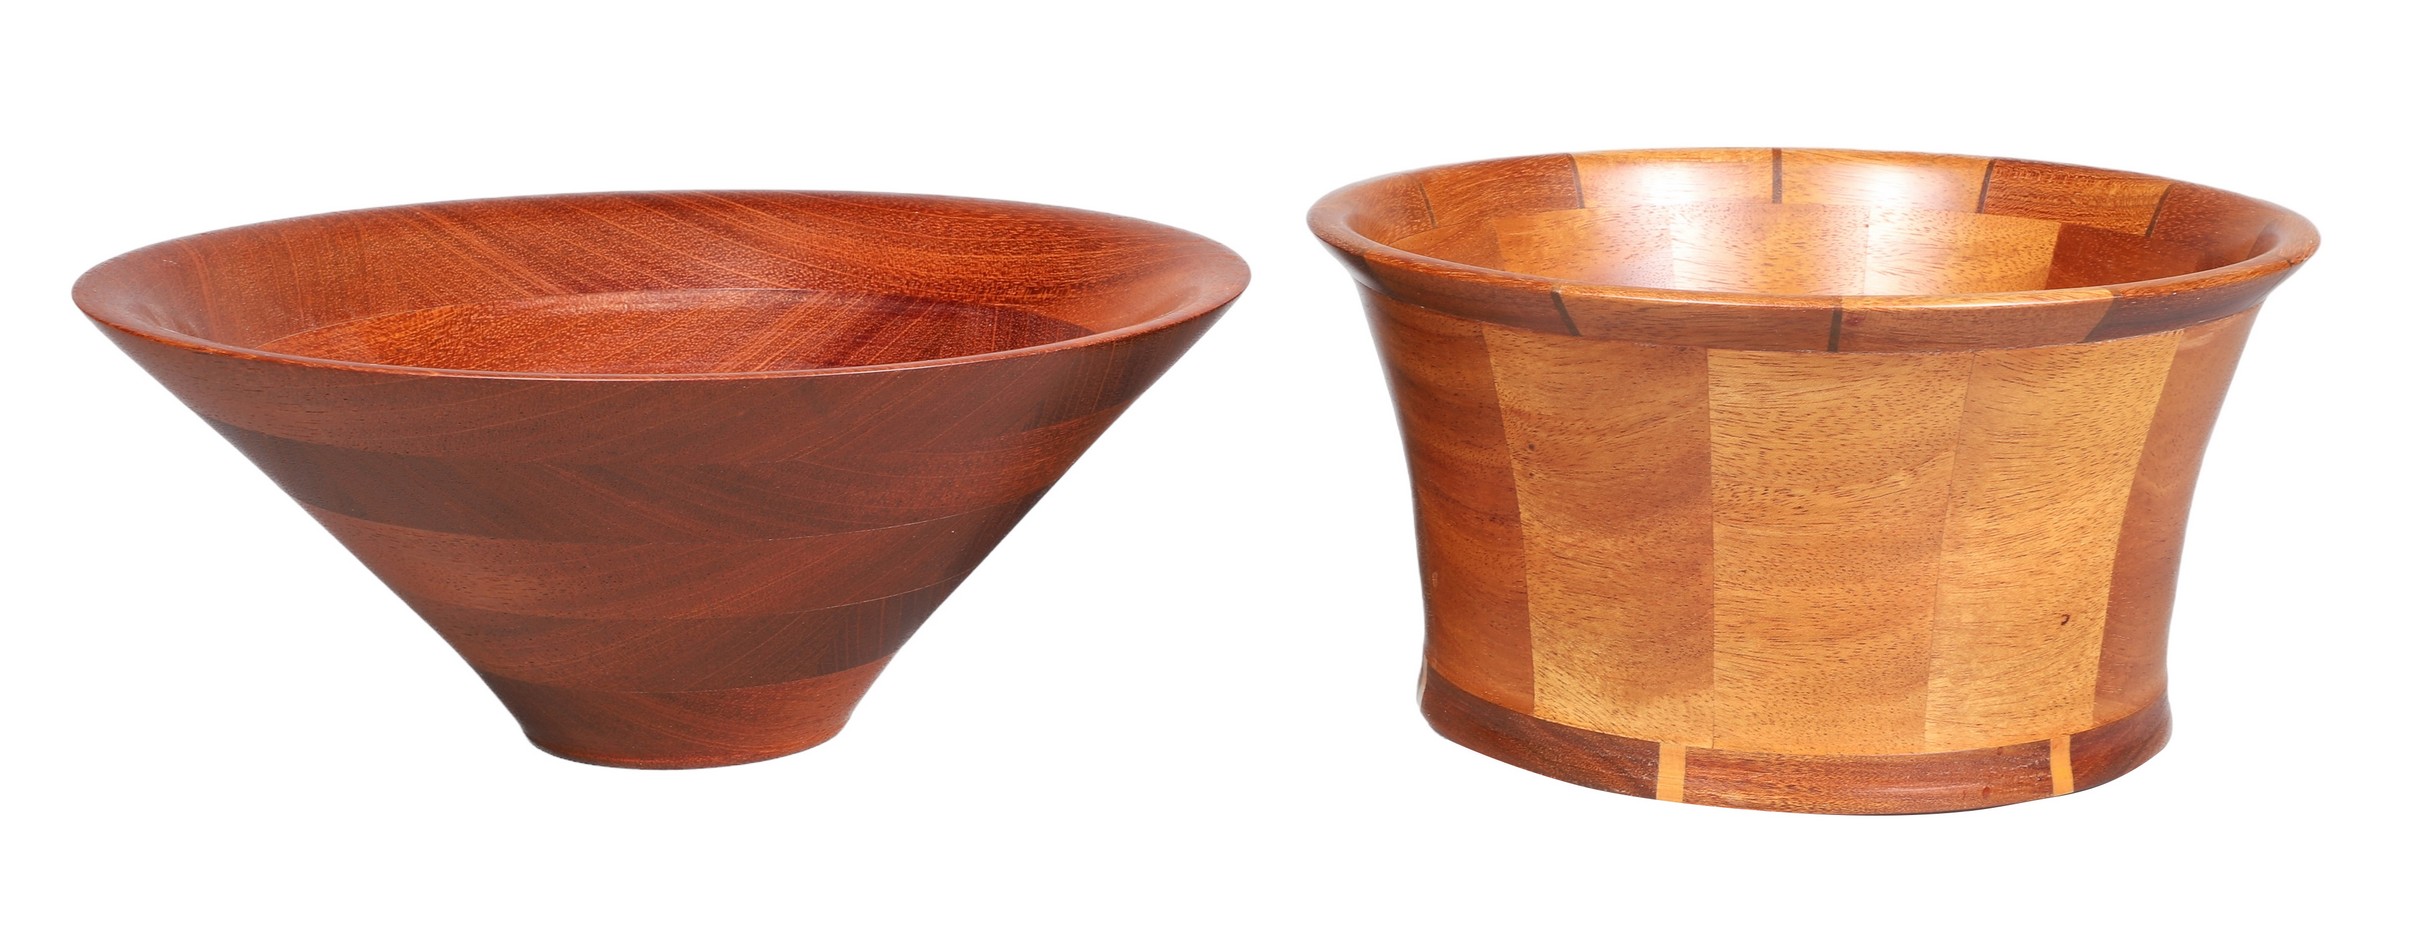  2 Bill Roberts turned wood bowls  2e0c7c